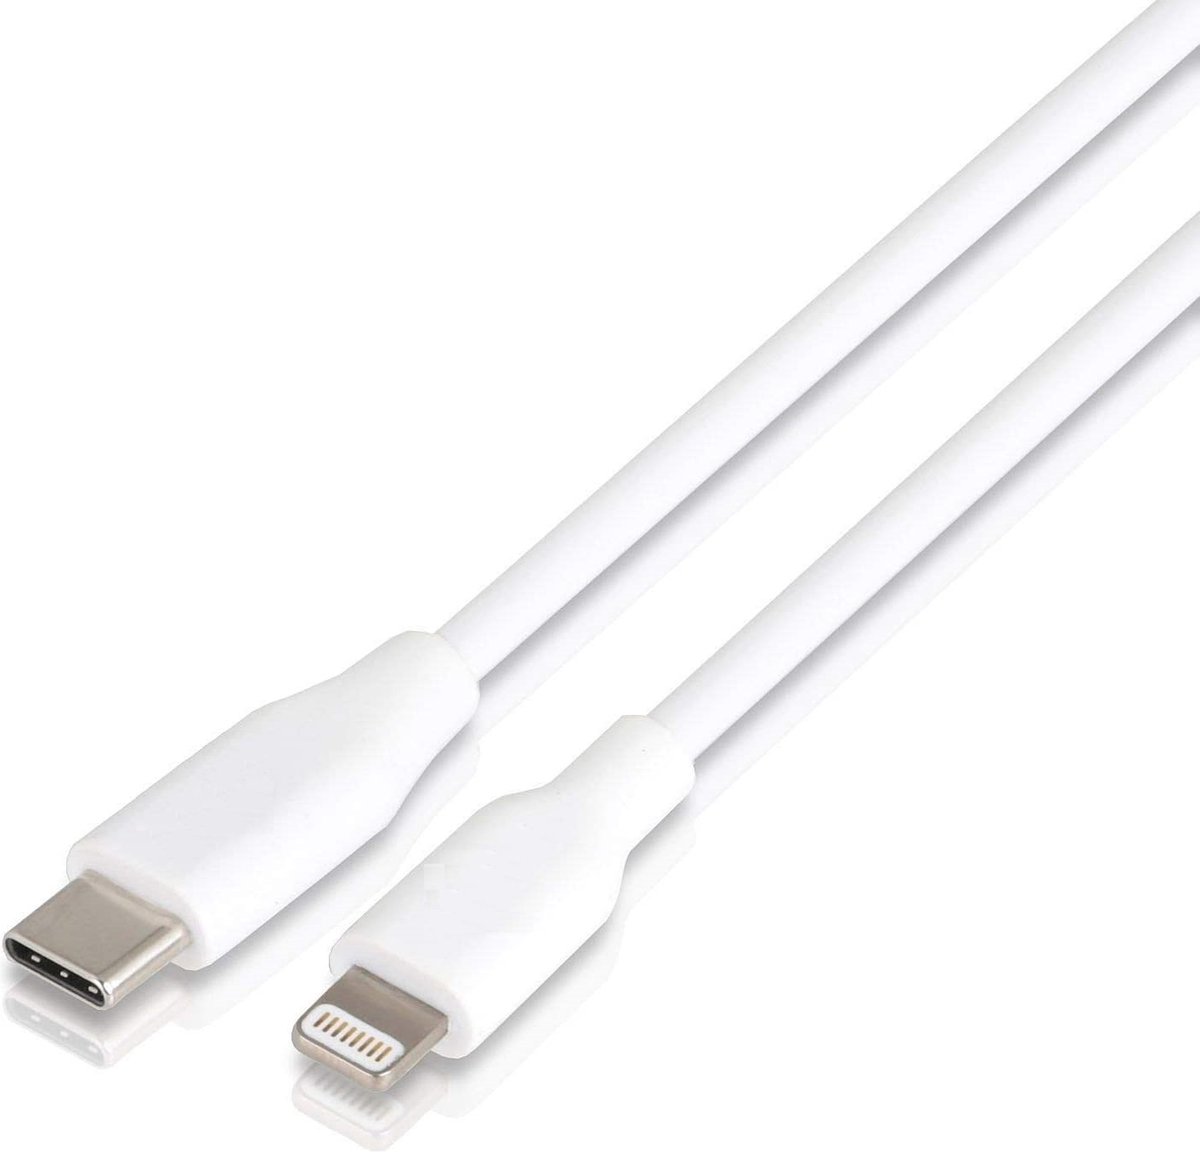 iPhone USB-C oplader kabel - 1 Meter - Geschikt voor Apple iPhone 6,7,8,X,XS,XR,11,12,13,Mini,Pro Max- iPhone kabel USB-C - iPhone oplaadkabel - iPhone snoertje - iPhone lader - Datakabel - Lightning USB-C Kabel - Snellader